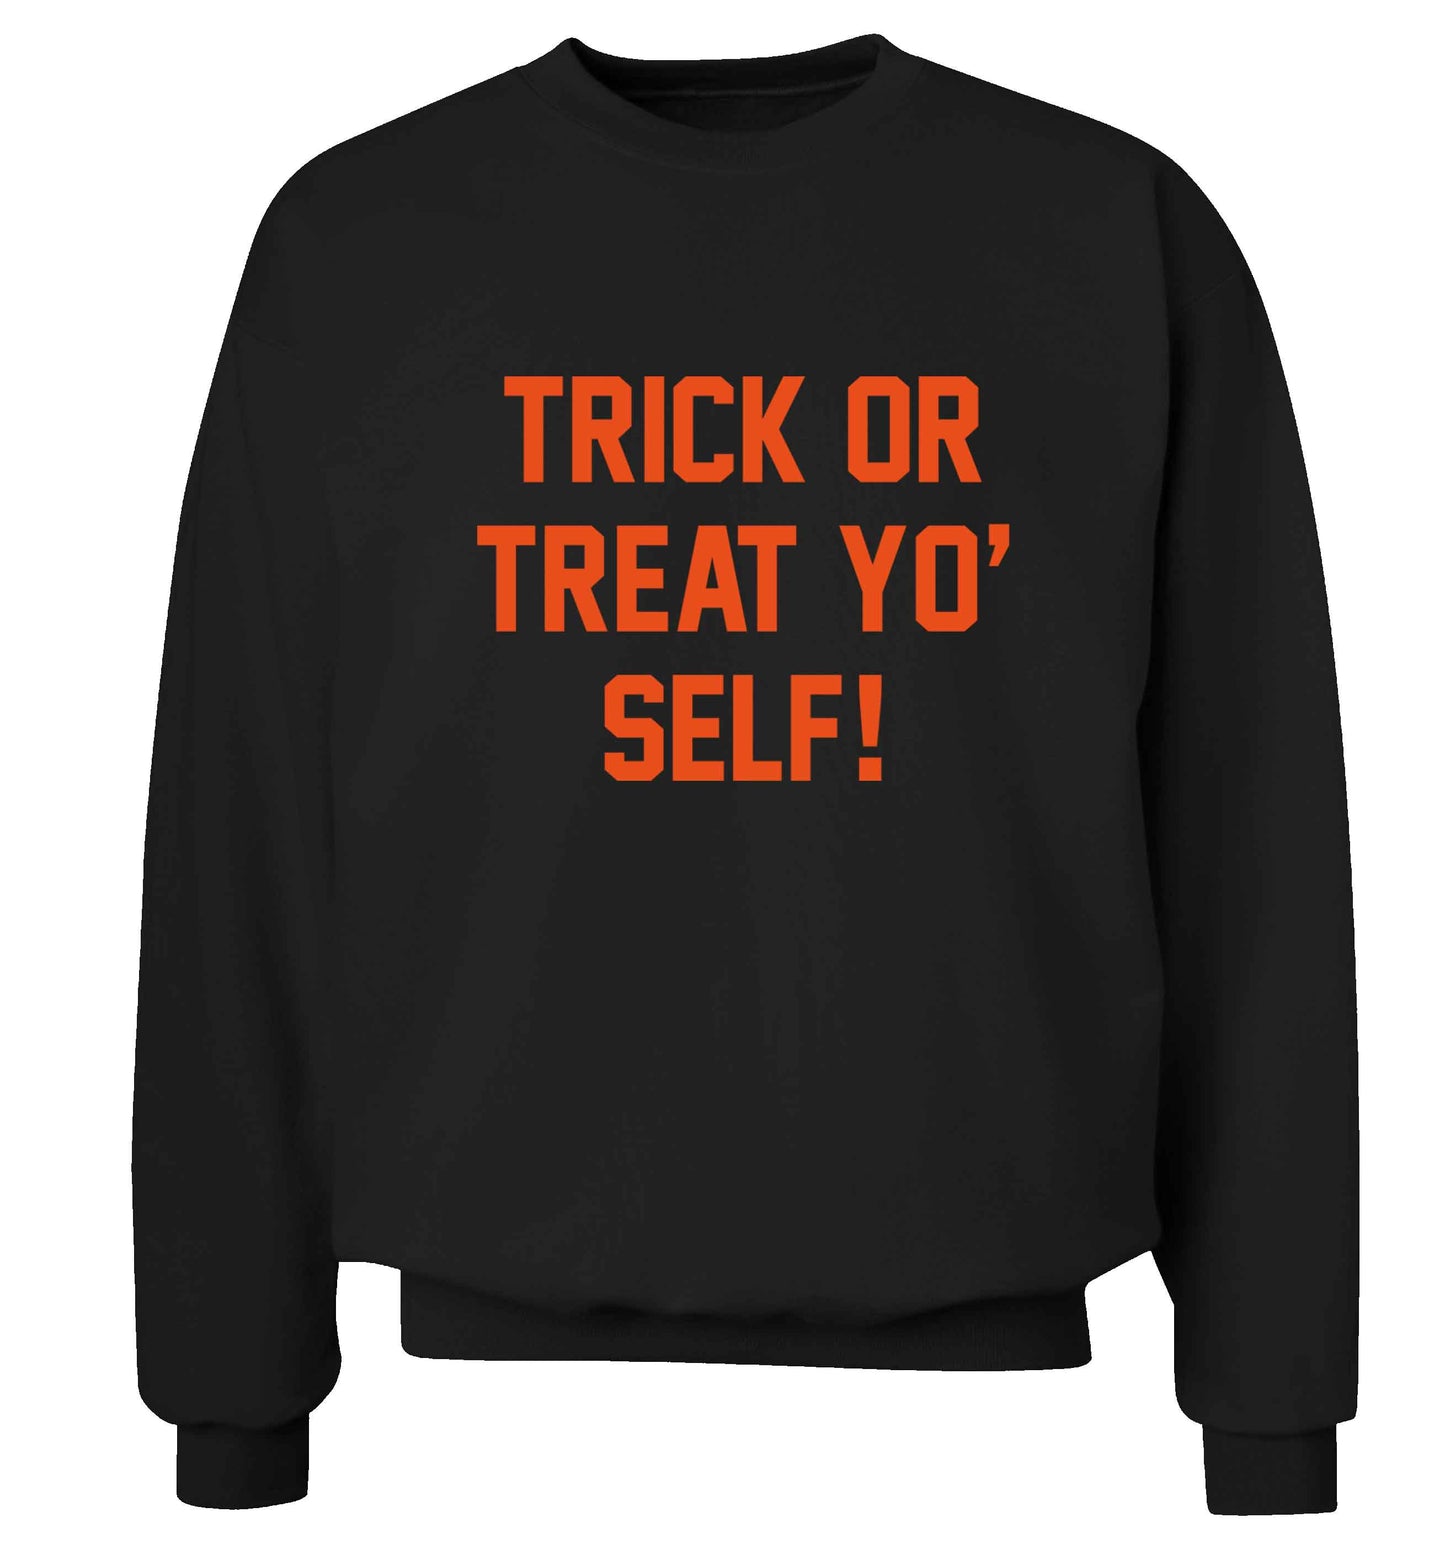 Trick or Treat Yo' Self adult's unisex black sweater 2XL